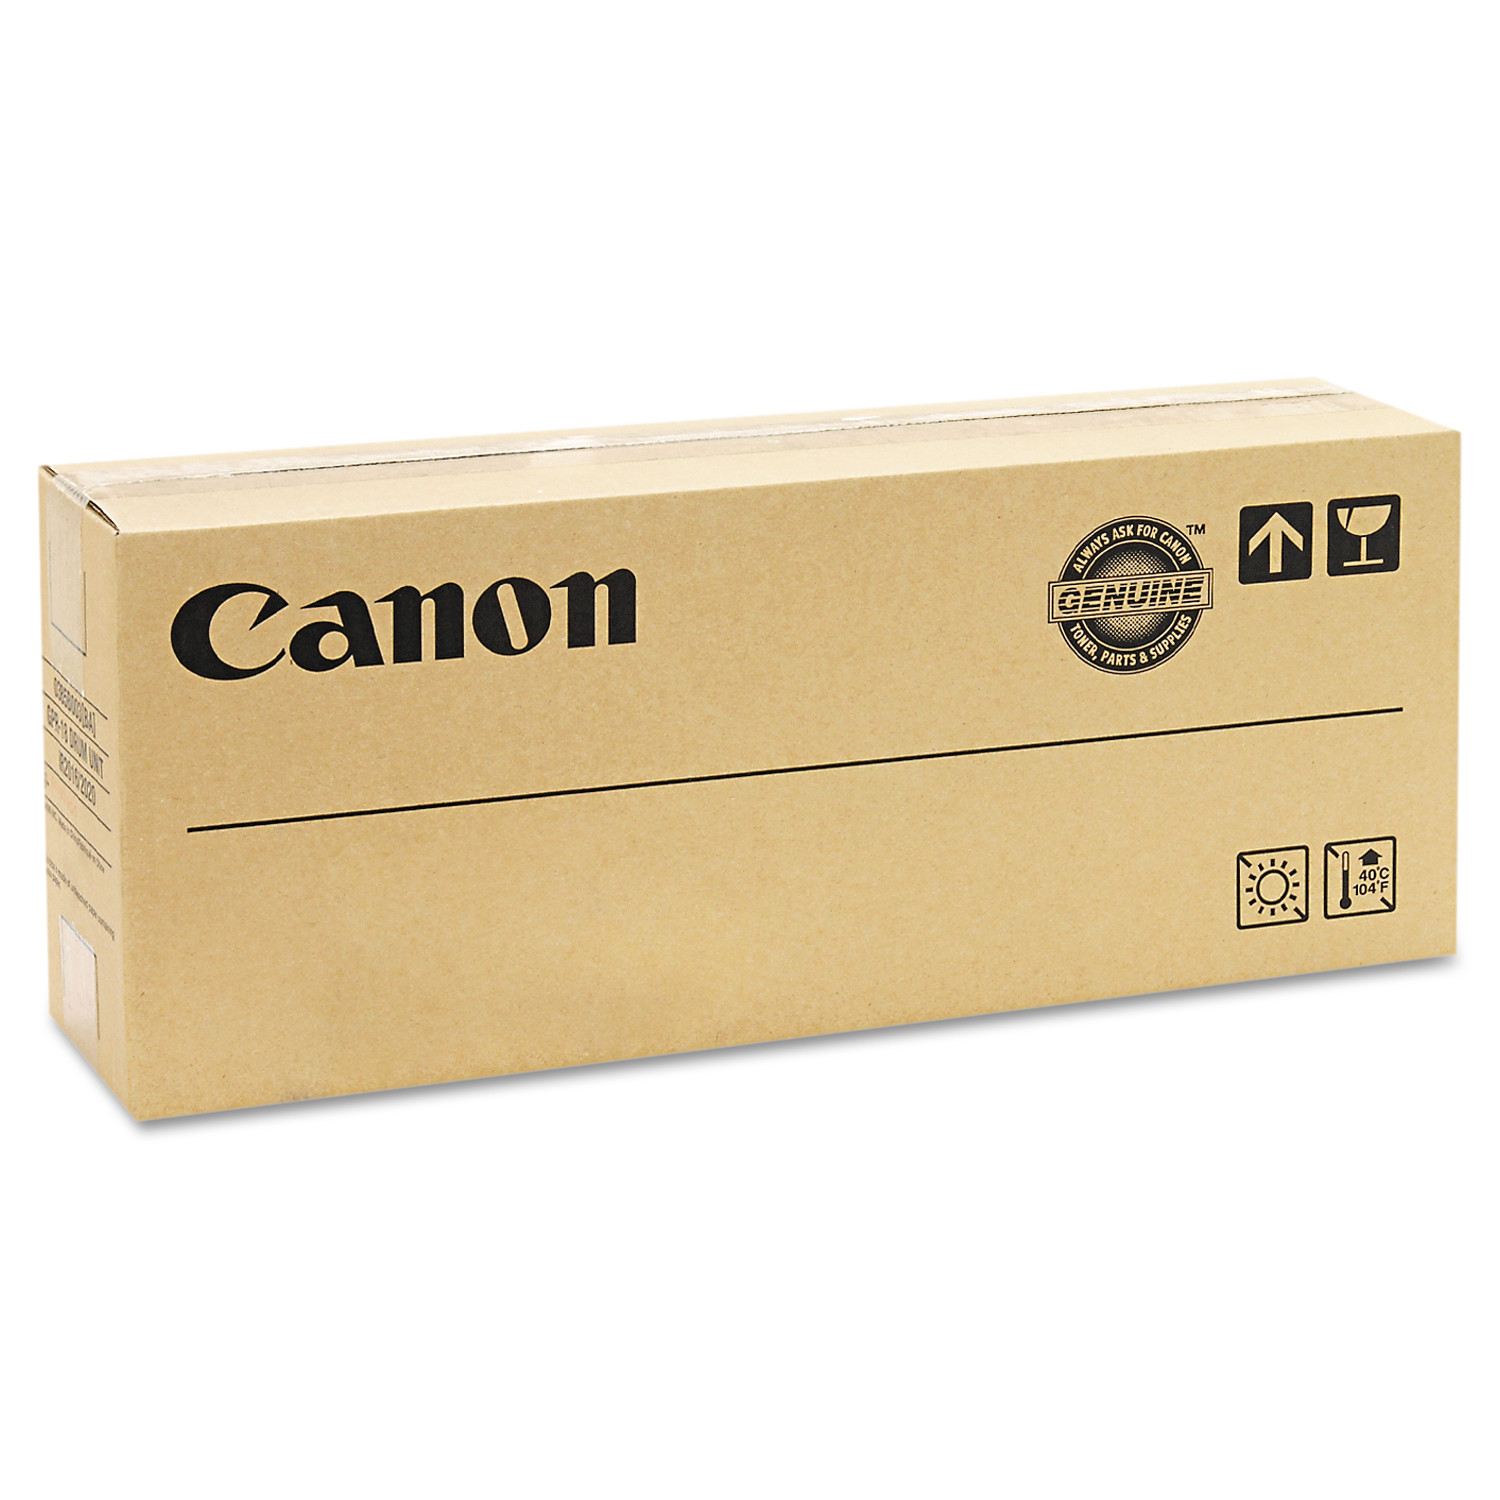 Canon (GPR-36) Magenta Toner Cartridge (19,000 Yield) 3784B003AA - image 1 of 3